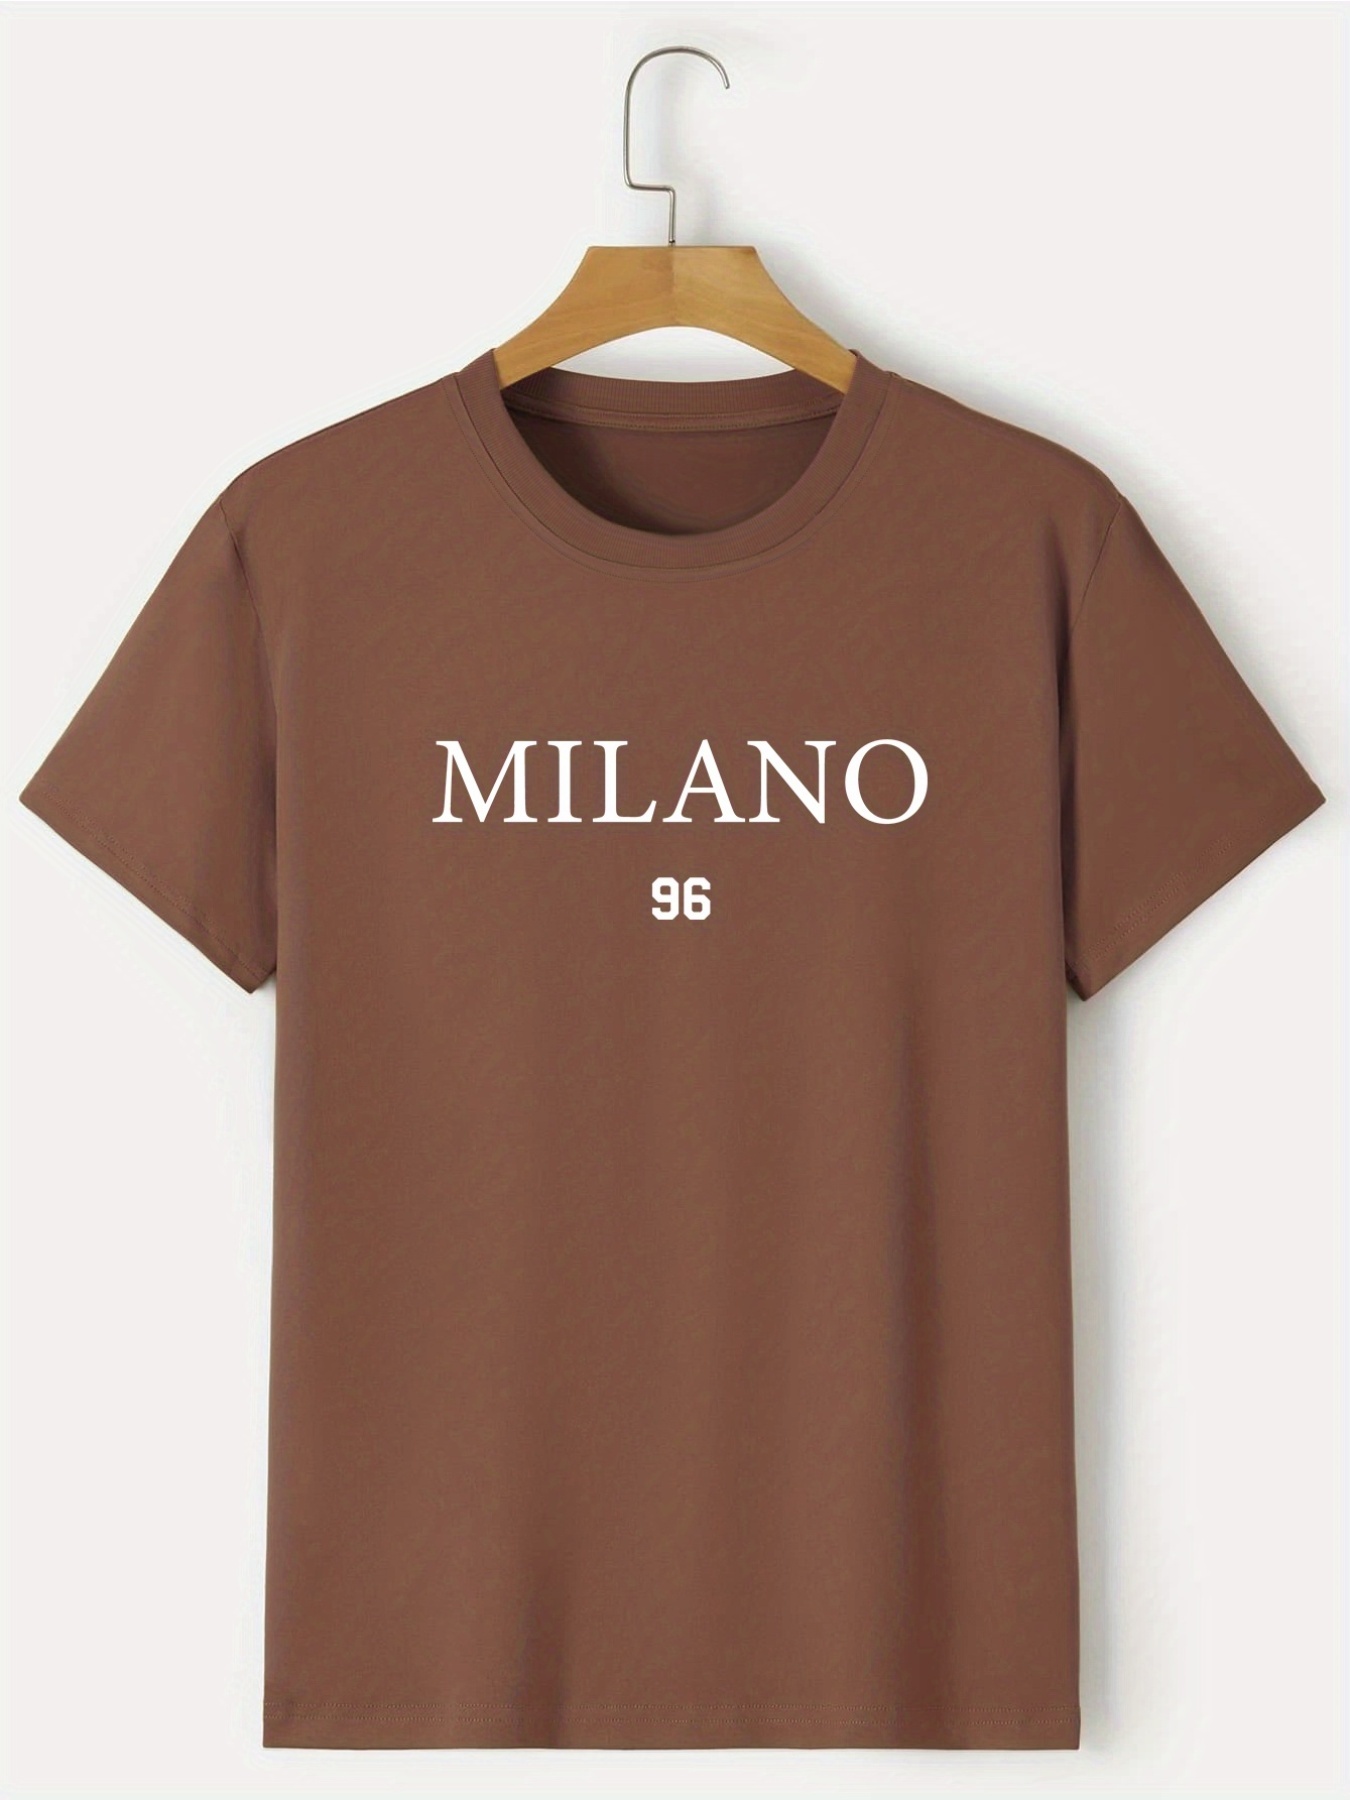 Milano di Rouge Black Fleece Crewneck Sweatshirt - Kids sz. M